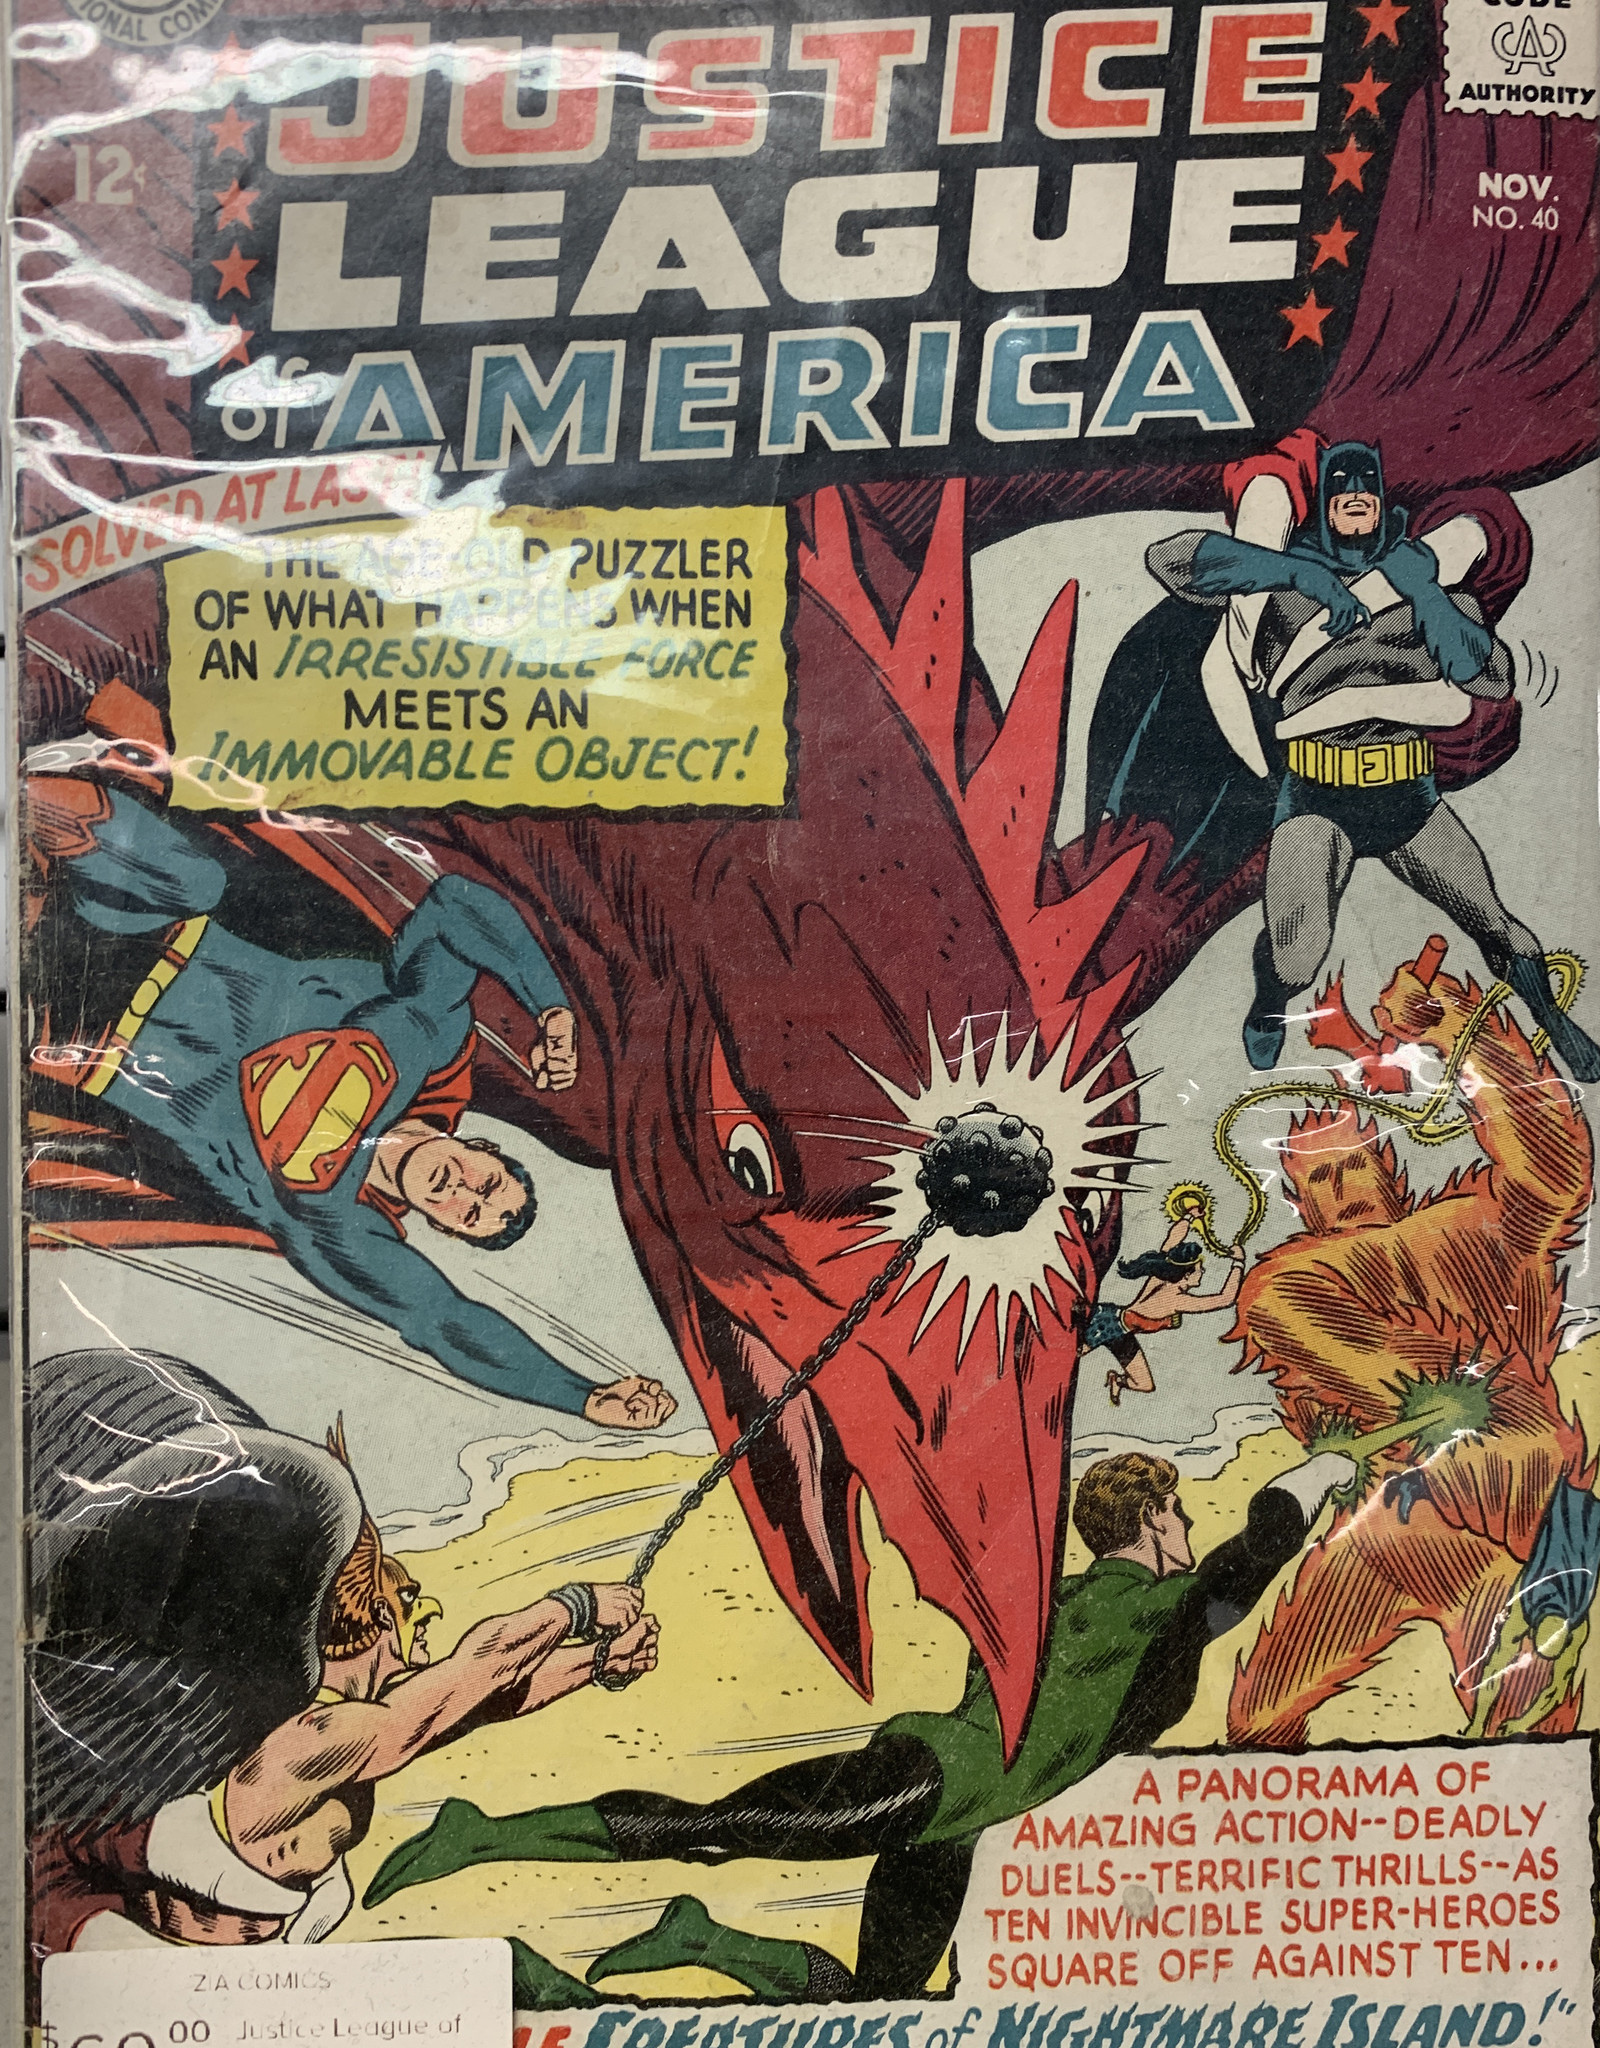 DC Comics Justice League of America #40